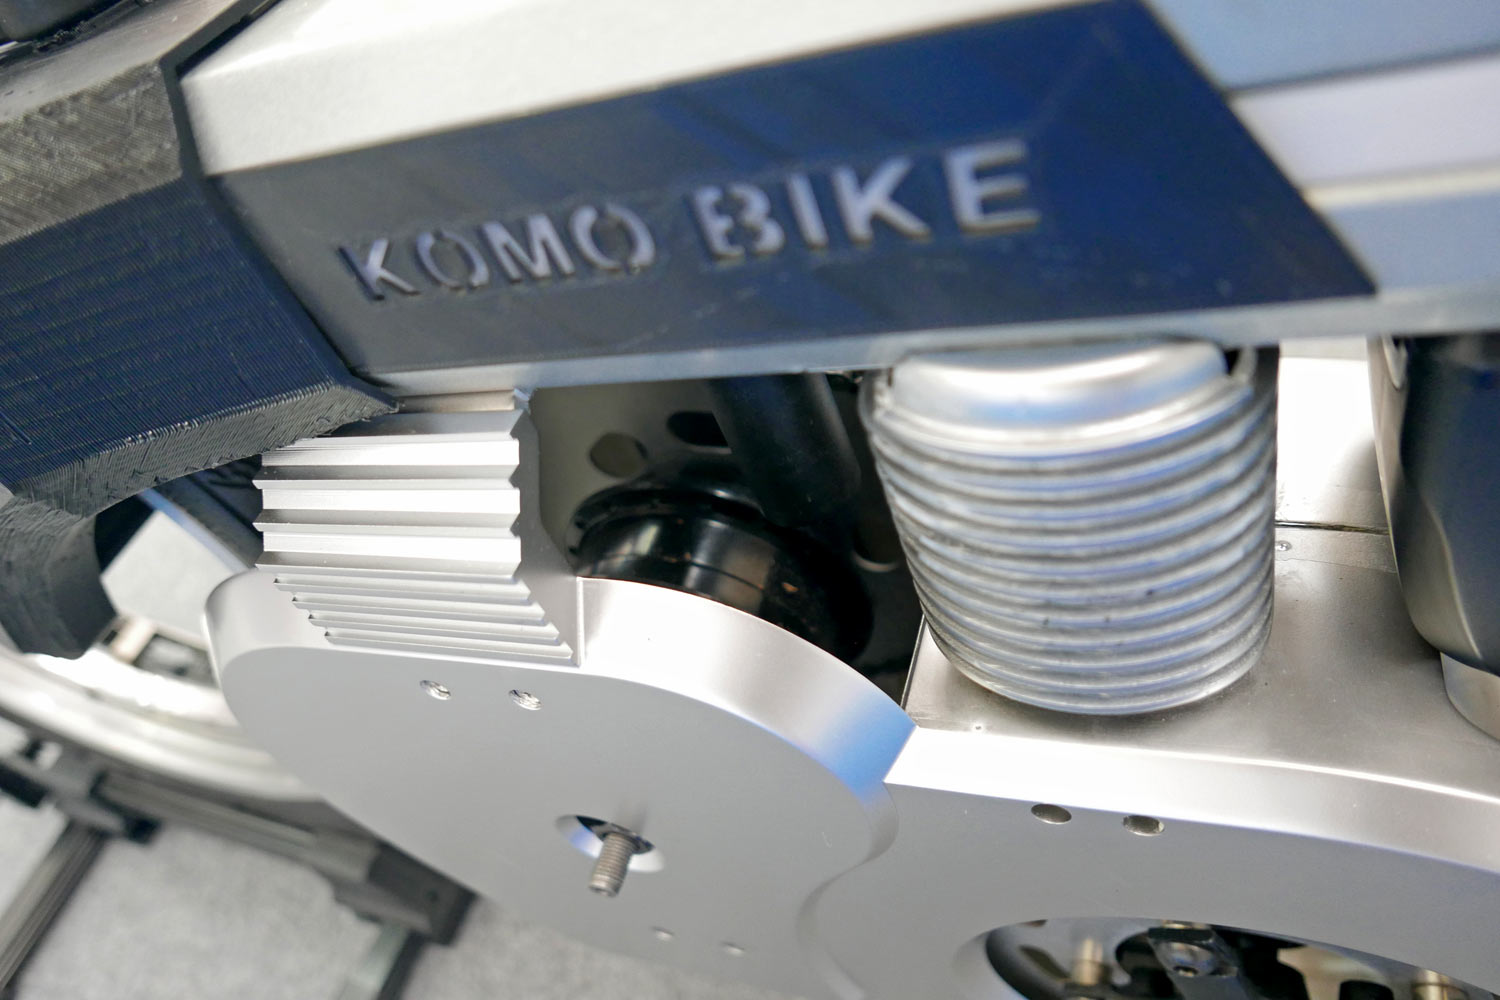 Komo Bike hubless ebike, hub drive motor inside